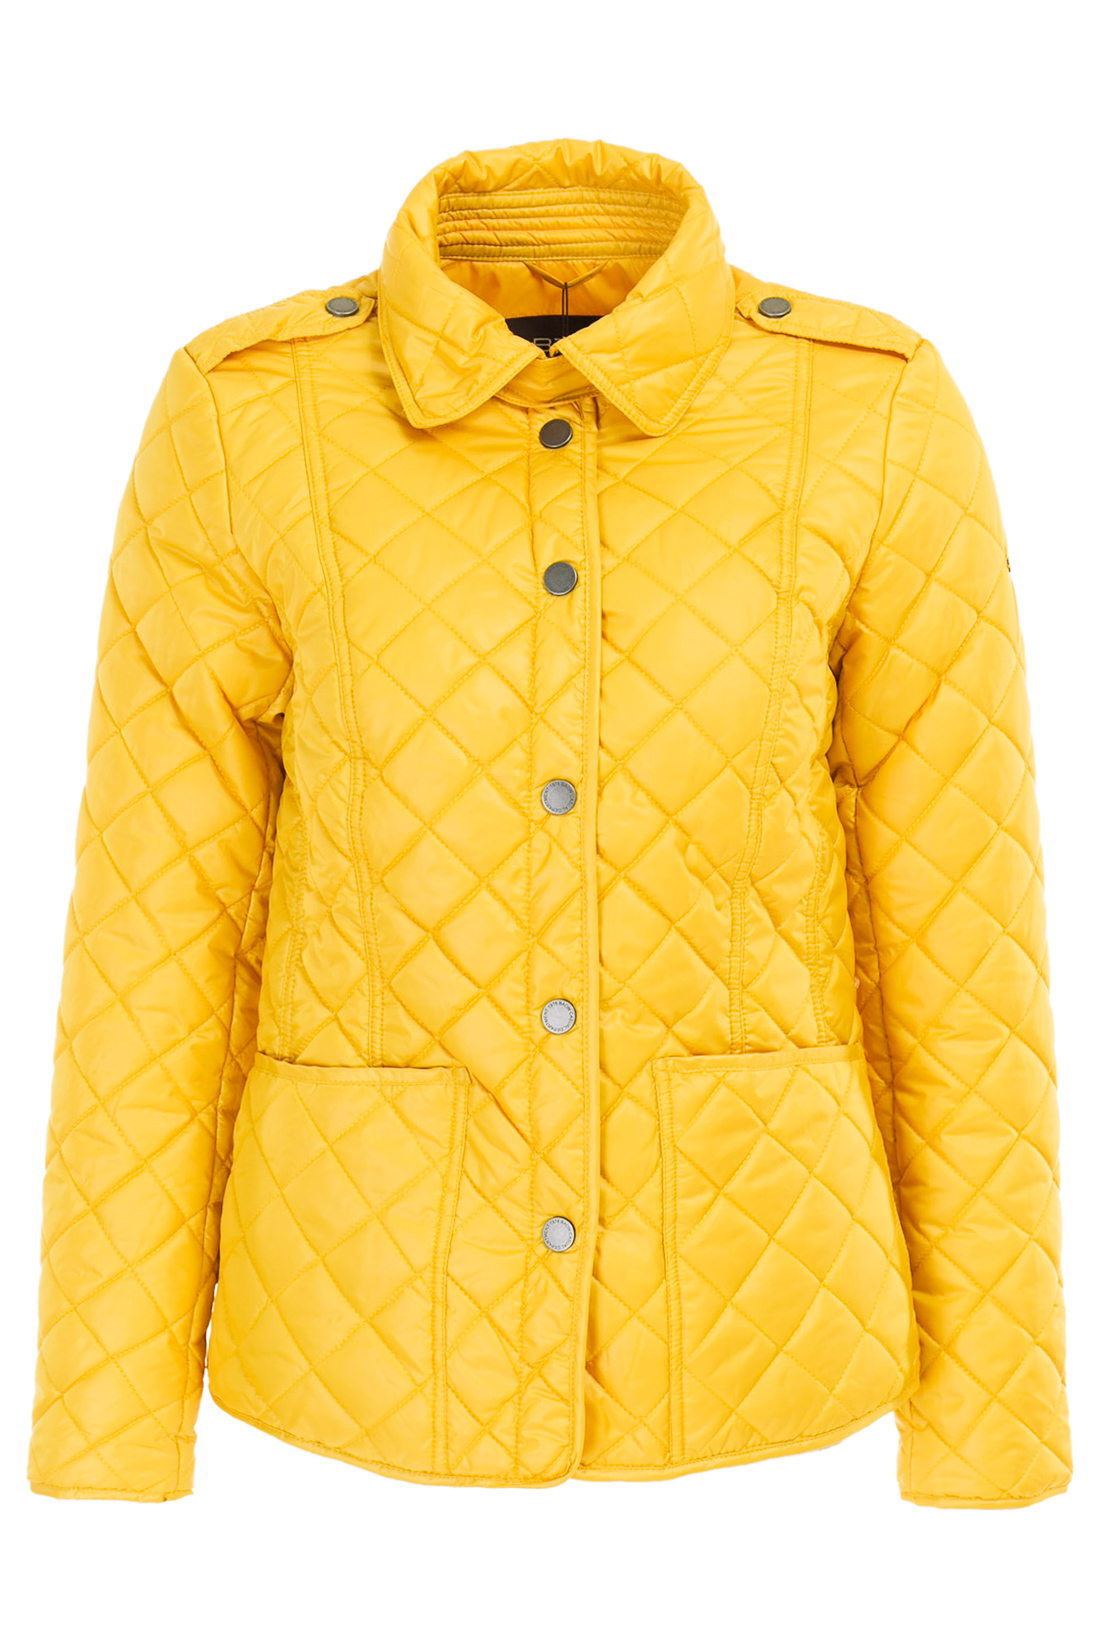 Озон стеганые куртки. Куртка стеганная Baon. Baon куртка желтая. Куртка демисезонная Baon женская стеганая.